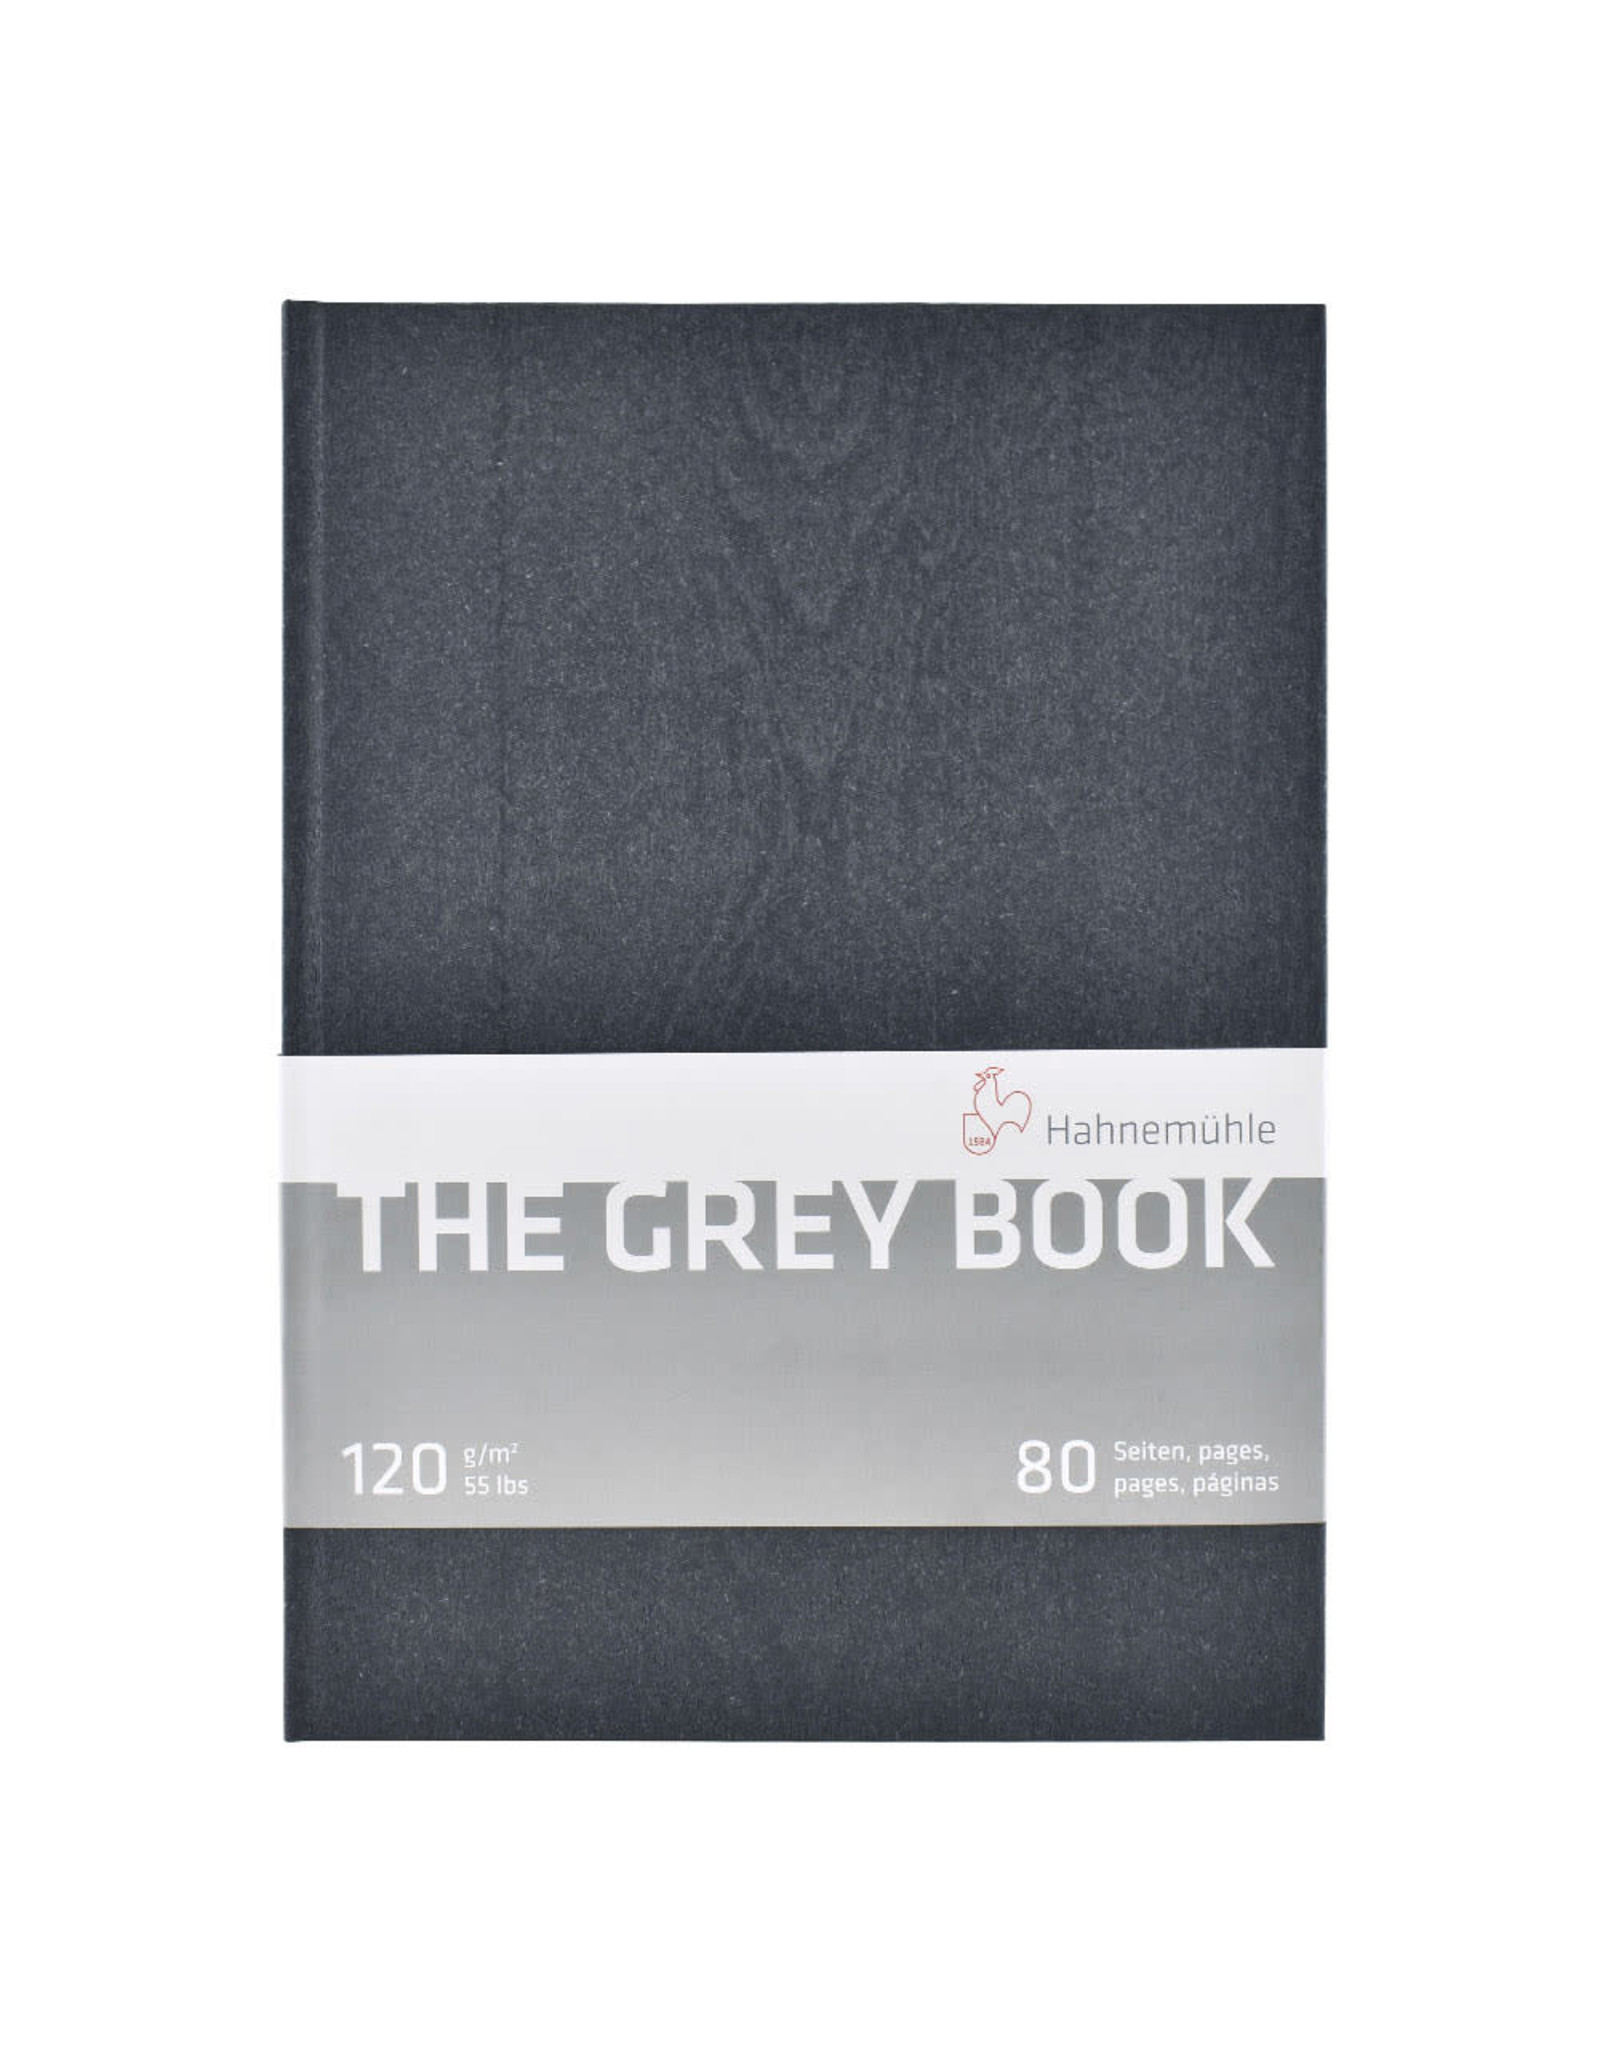 Hahnemuhle Hahnemuhle The Grey Book, 21cm x 30cm(8 ¼” x 11 ¾”)